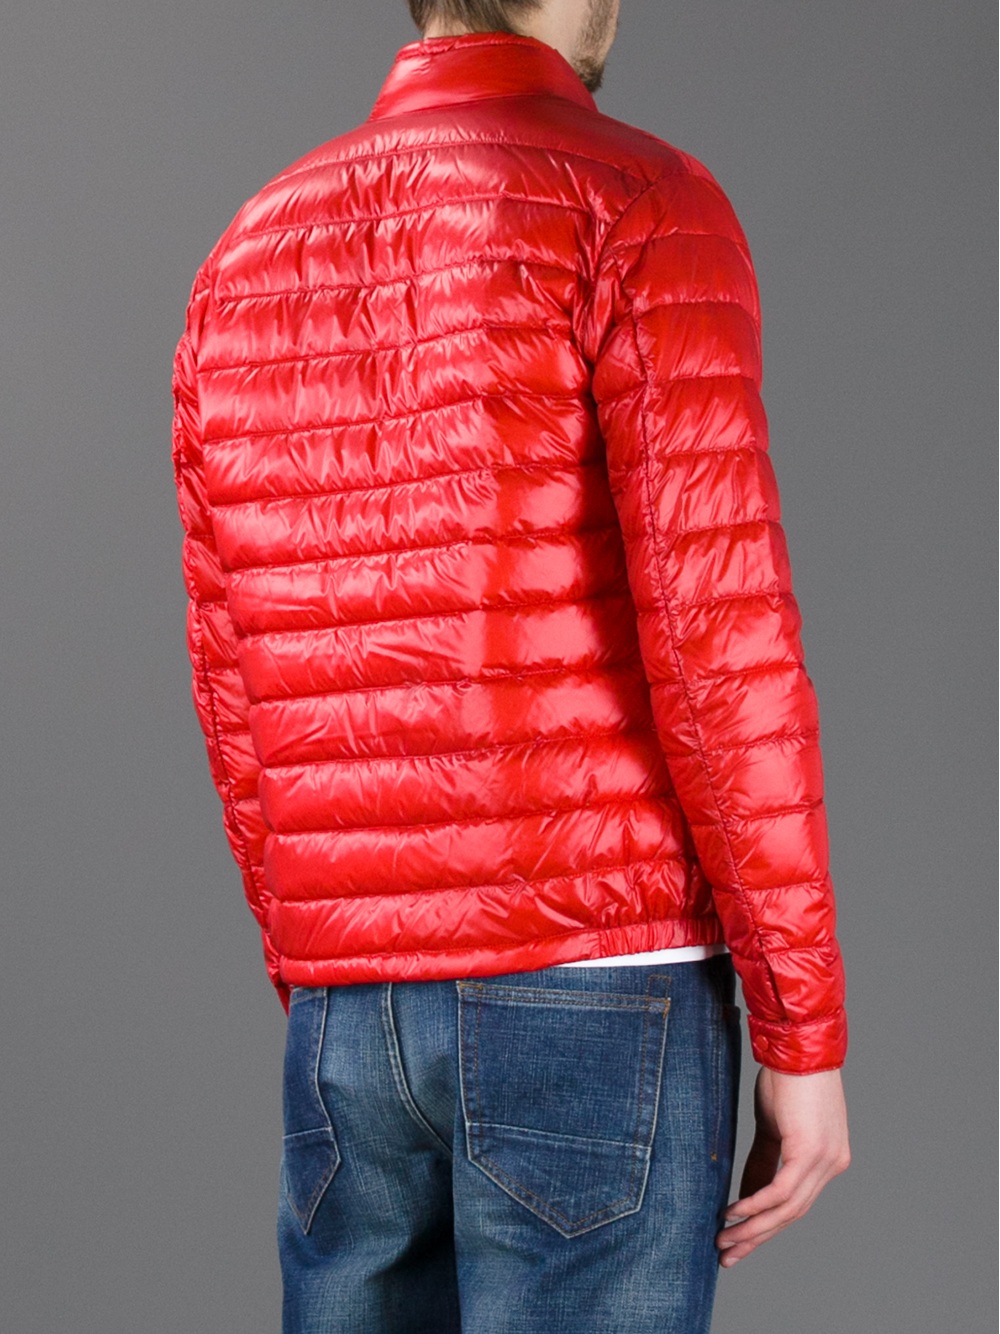 Moncler Rigel Padded Jacket in Red for Men - Lyst